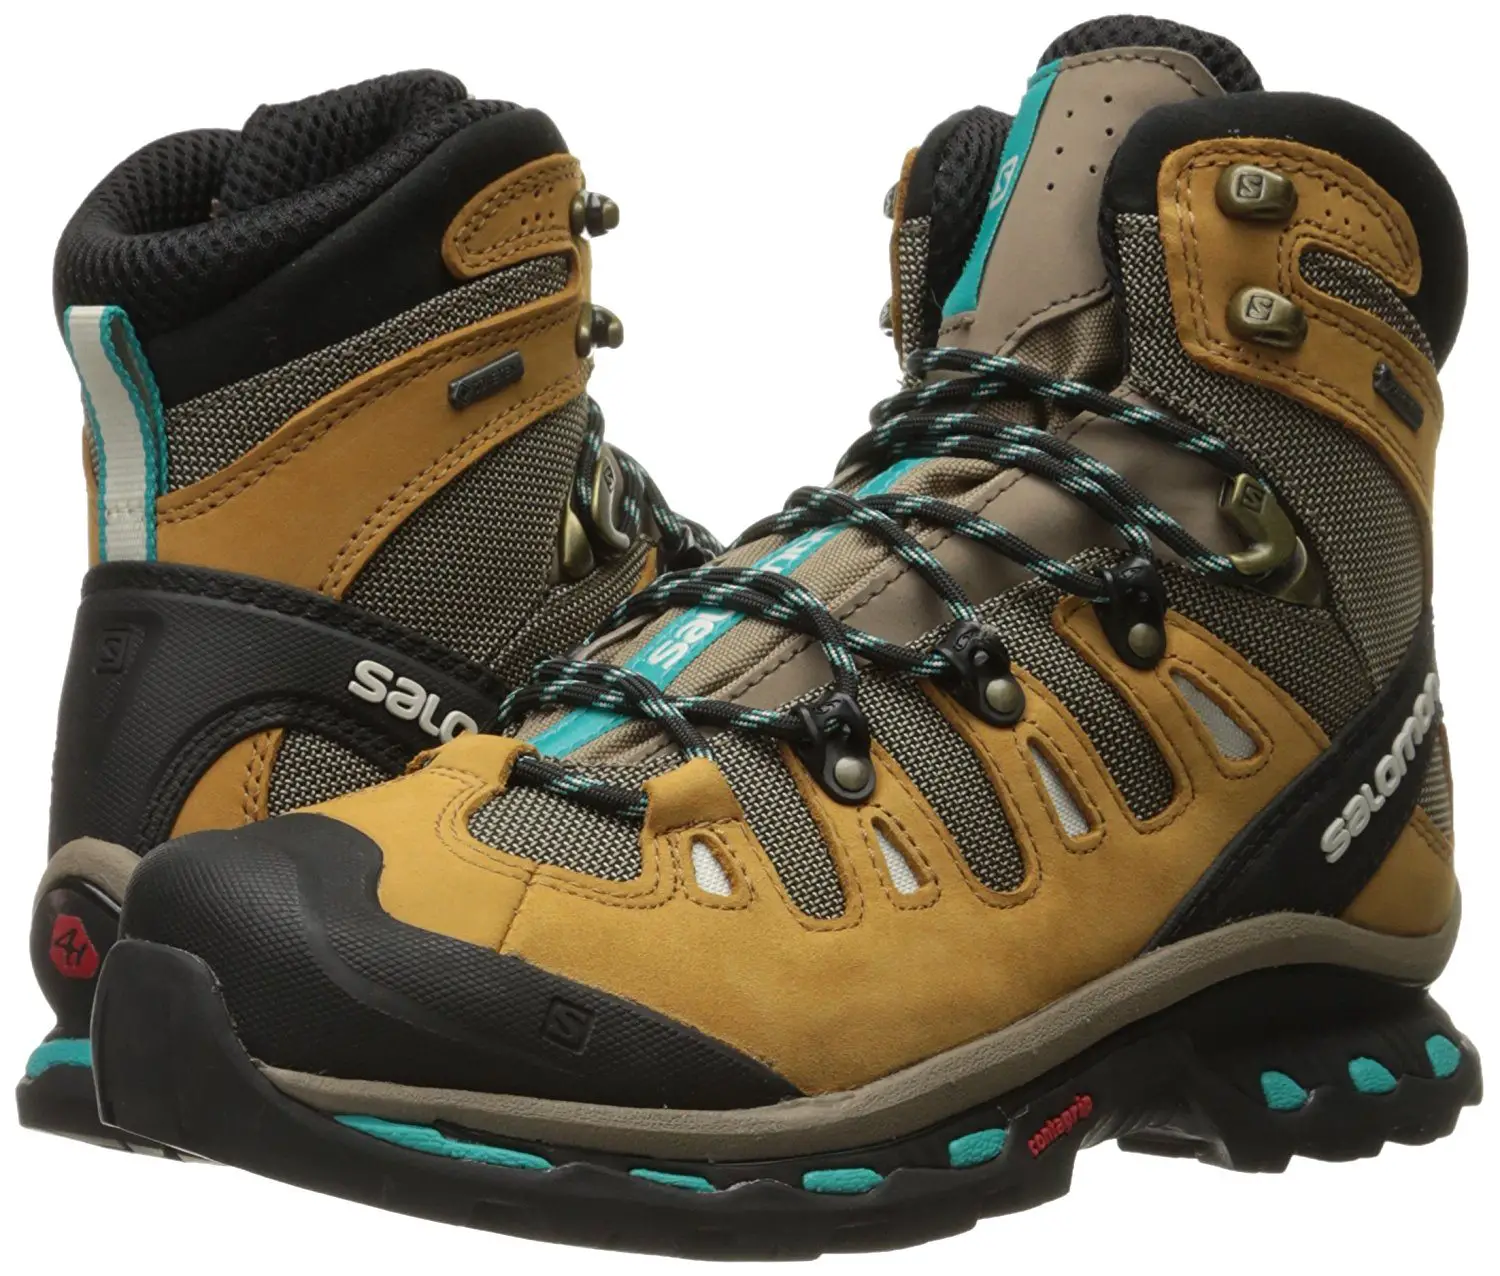 A pair of Salomon Quest 4D 2 GTX hiking boot